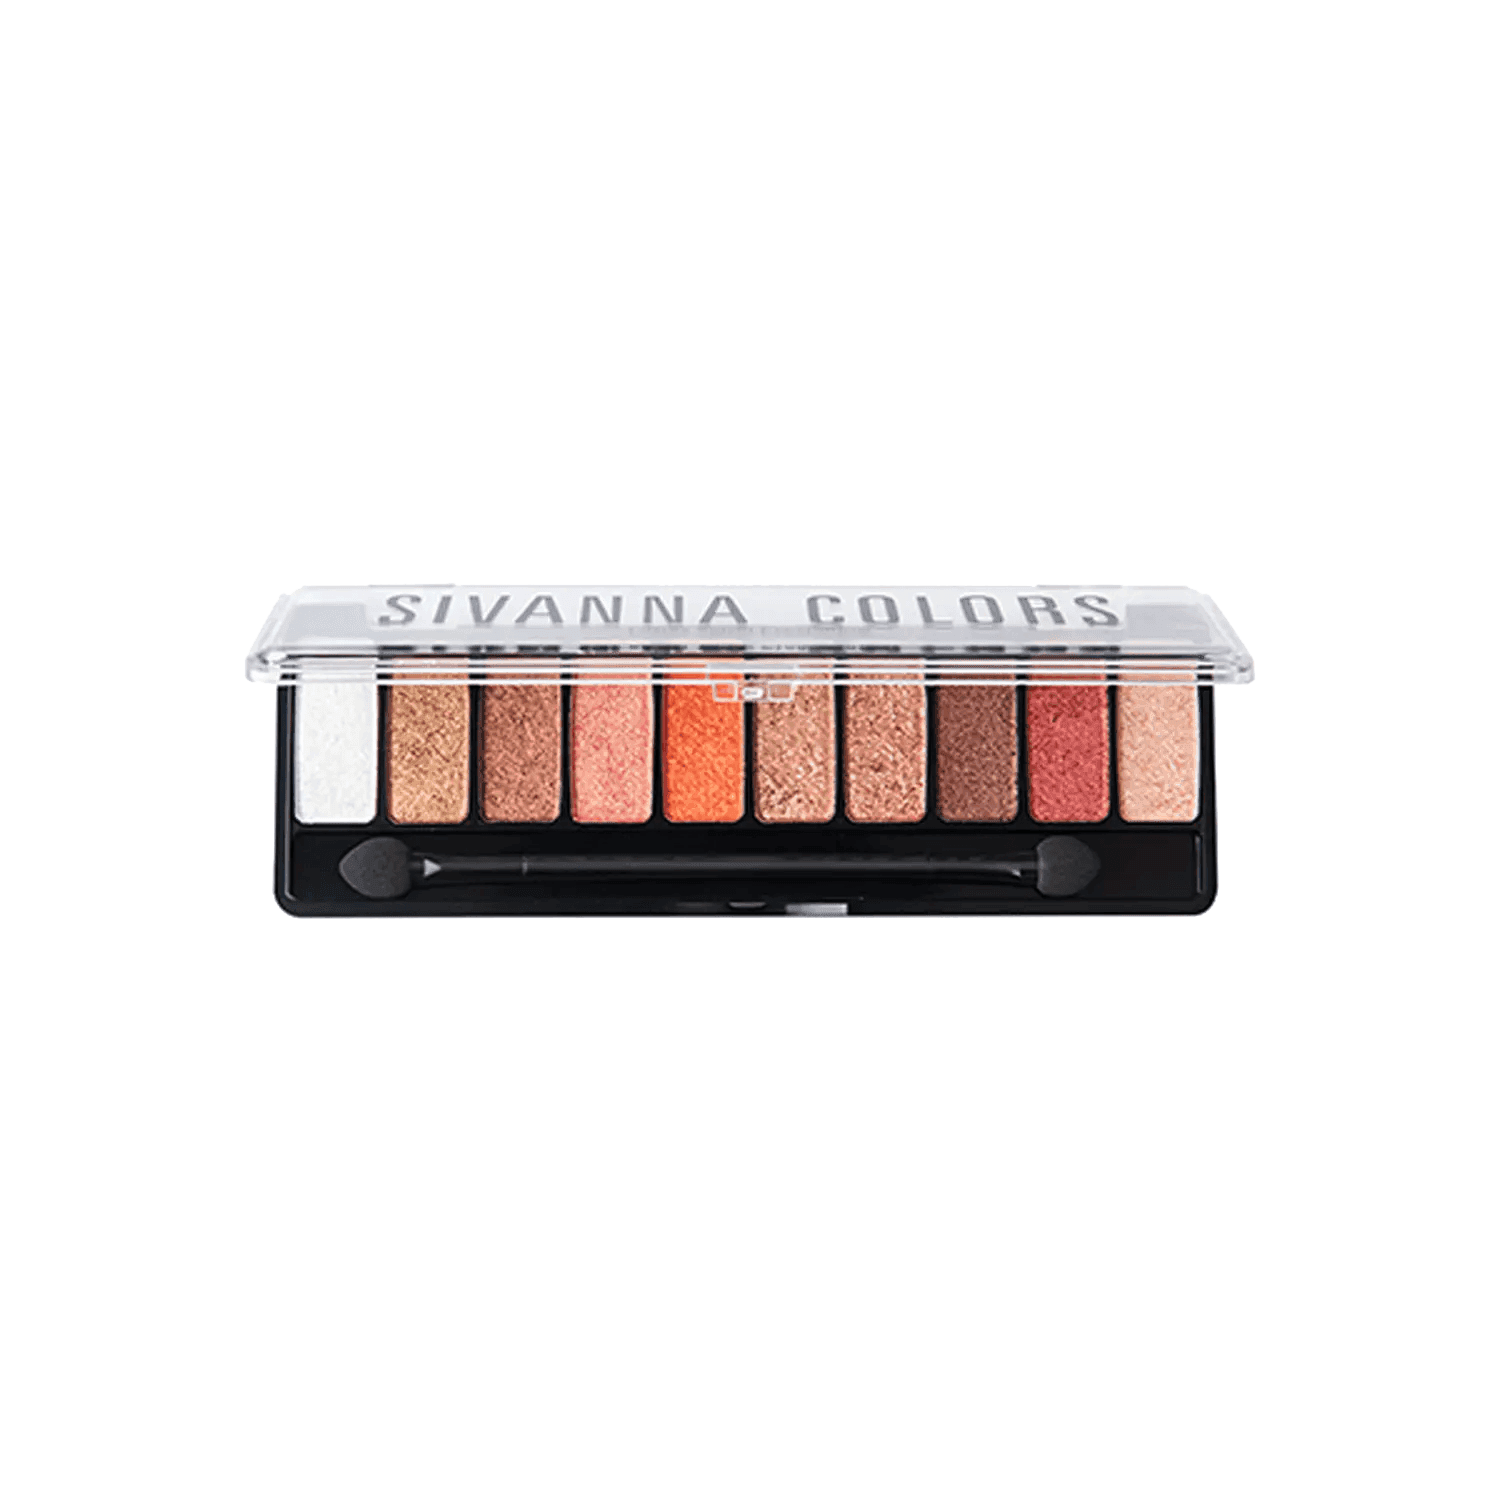 sivanna colors luxury velvet eyeshadow palette - 01 shade (12g)